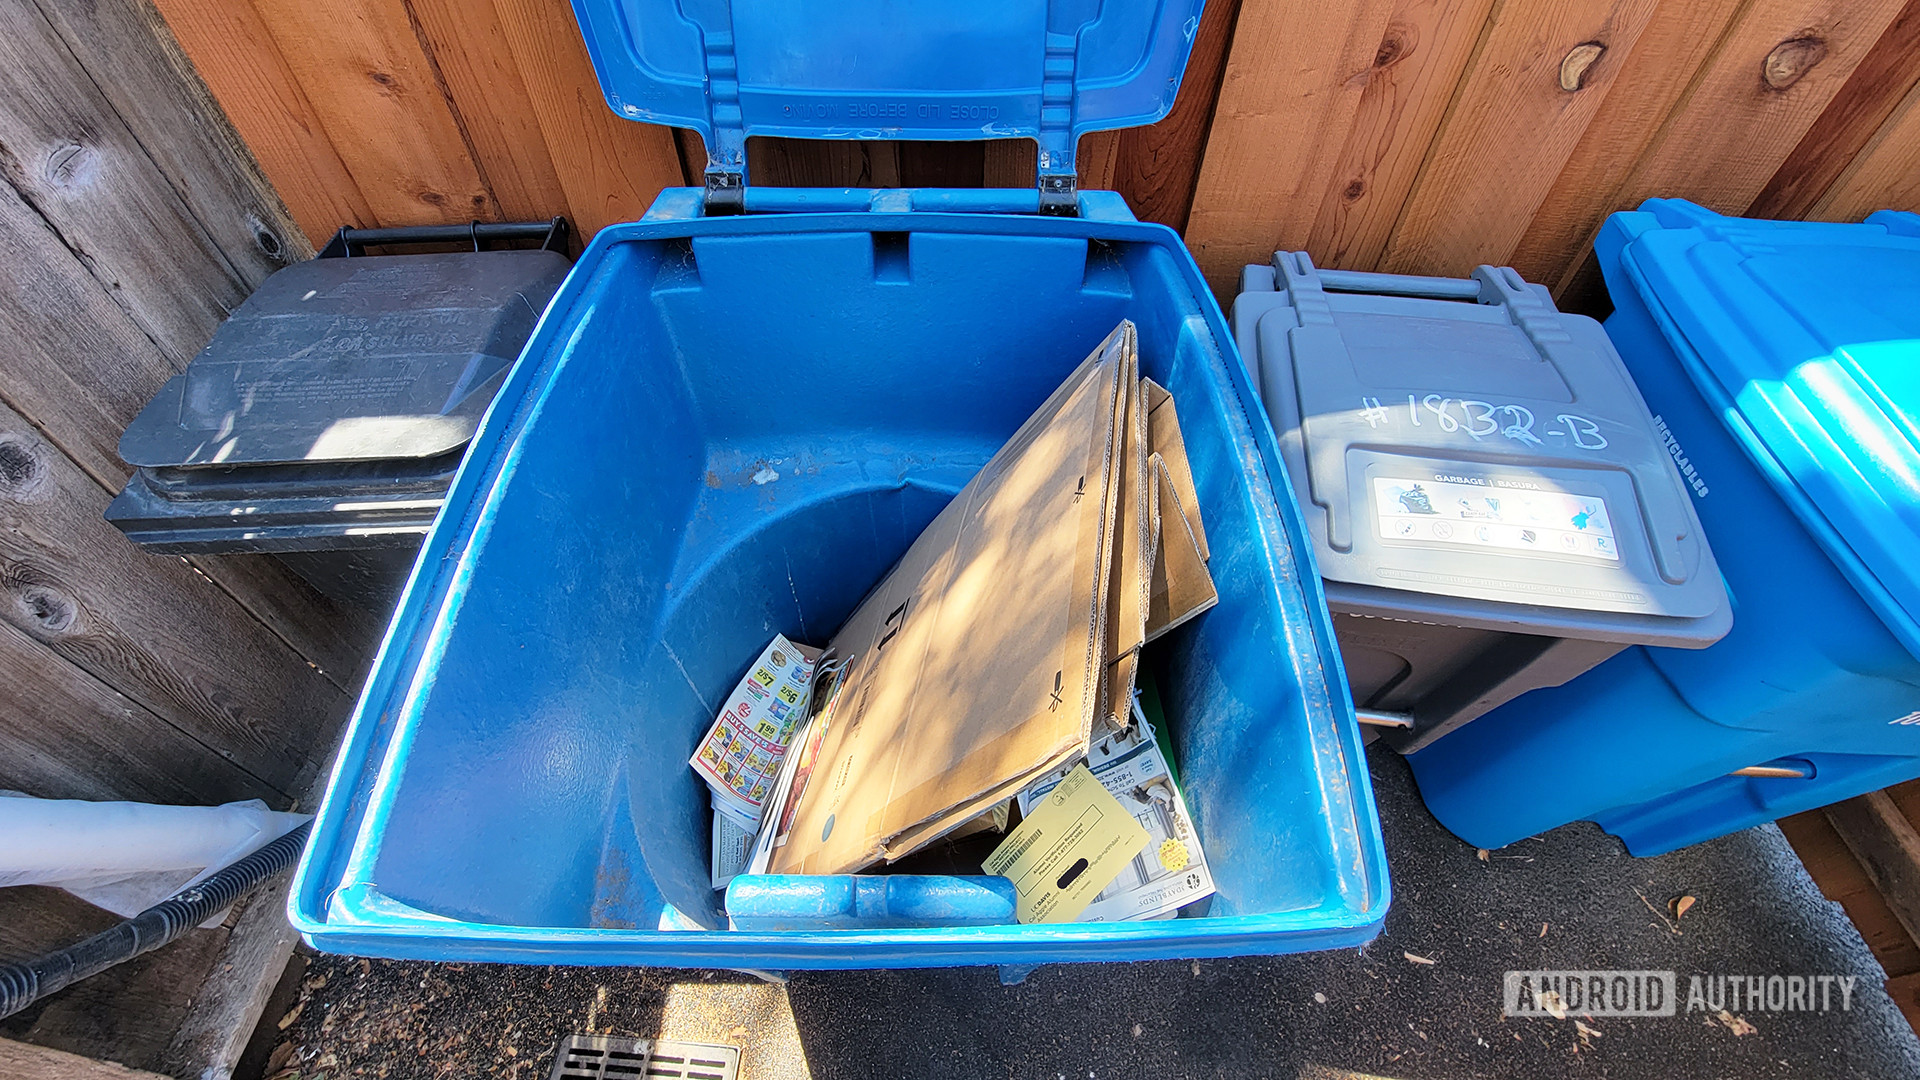 Recycling Bin Cardboard Trash